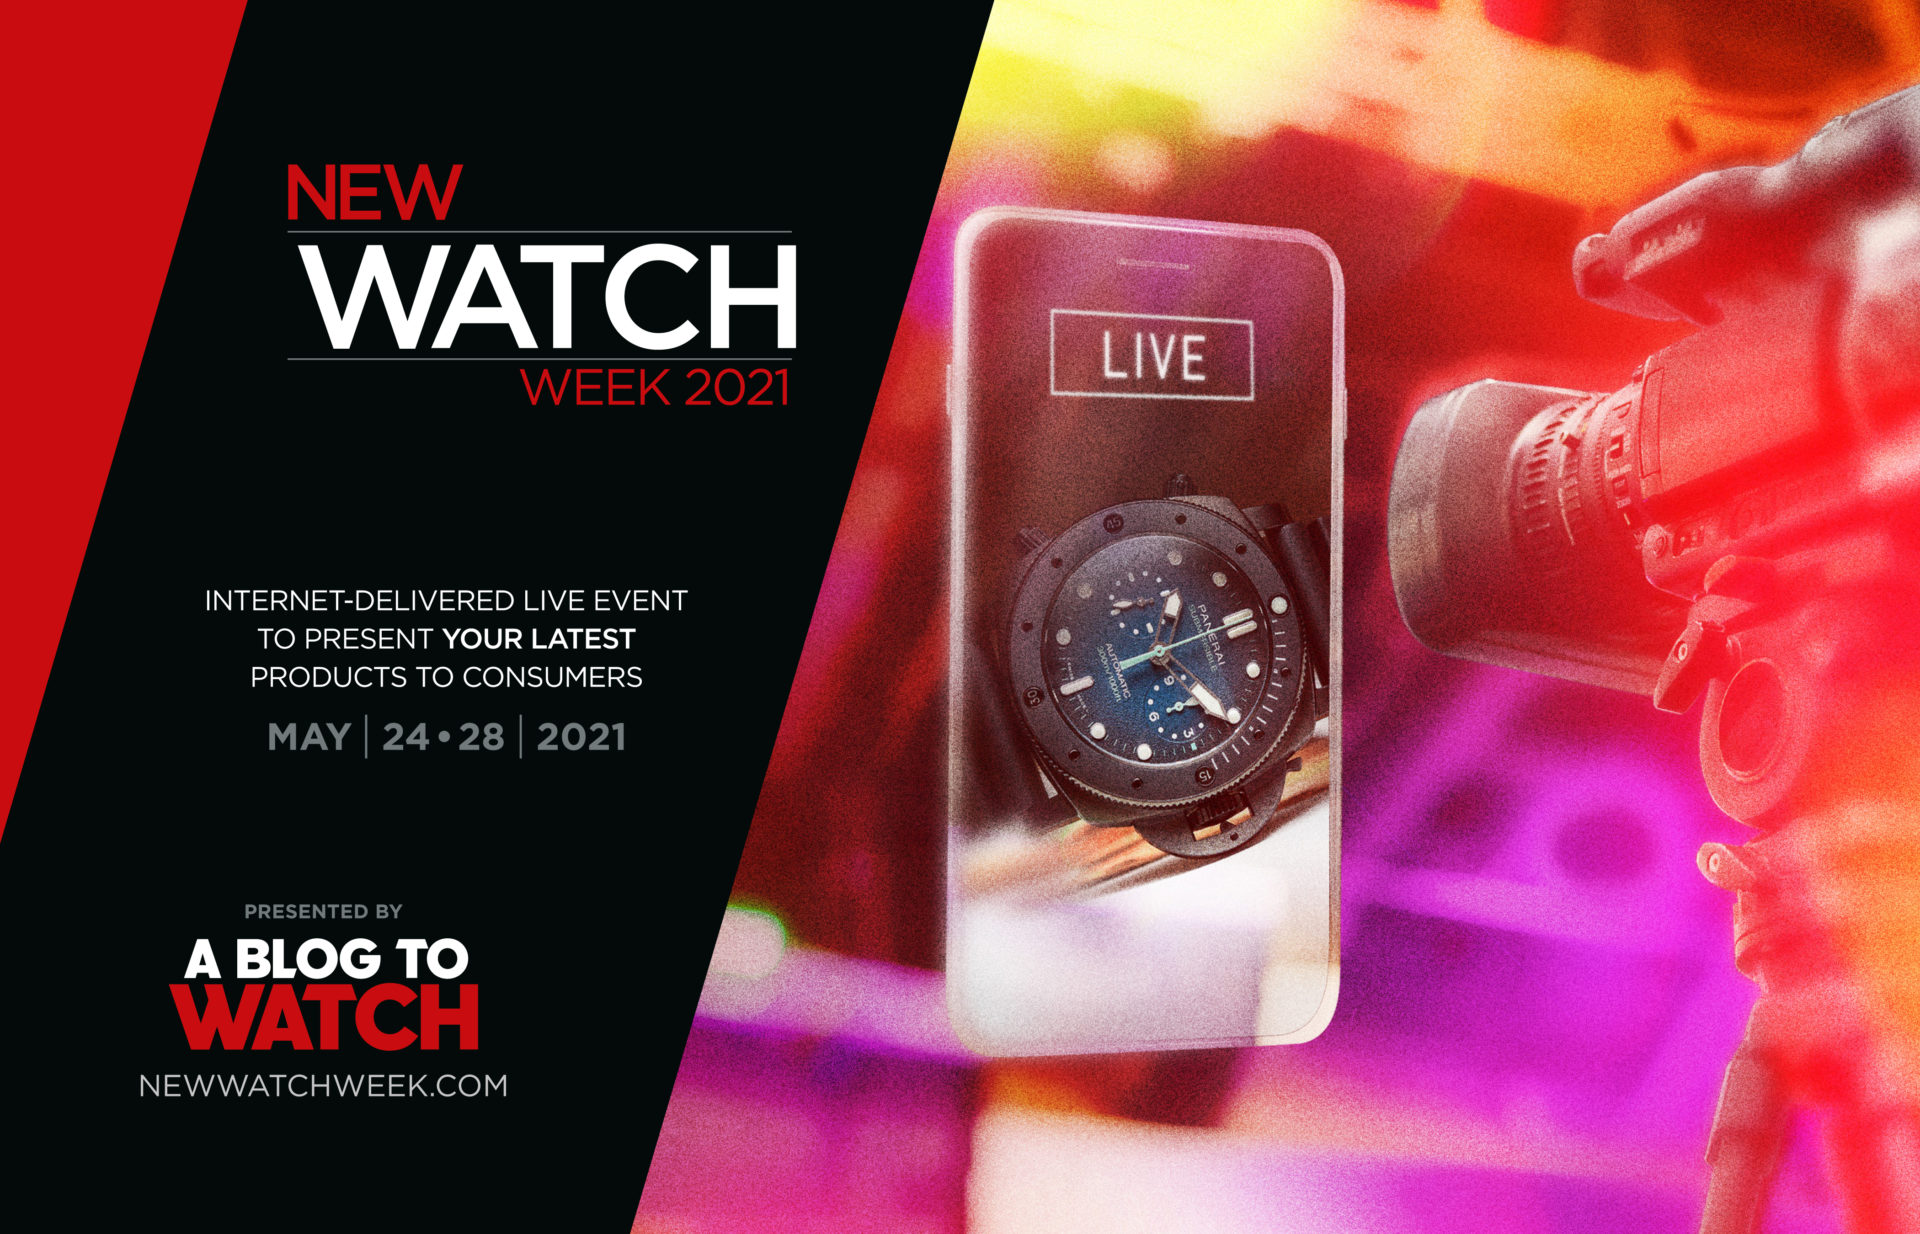 Abtw new watch week 2021 1